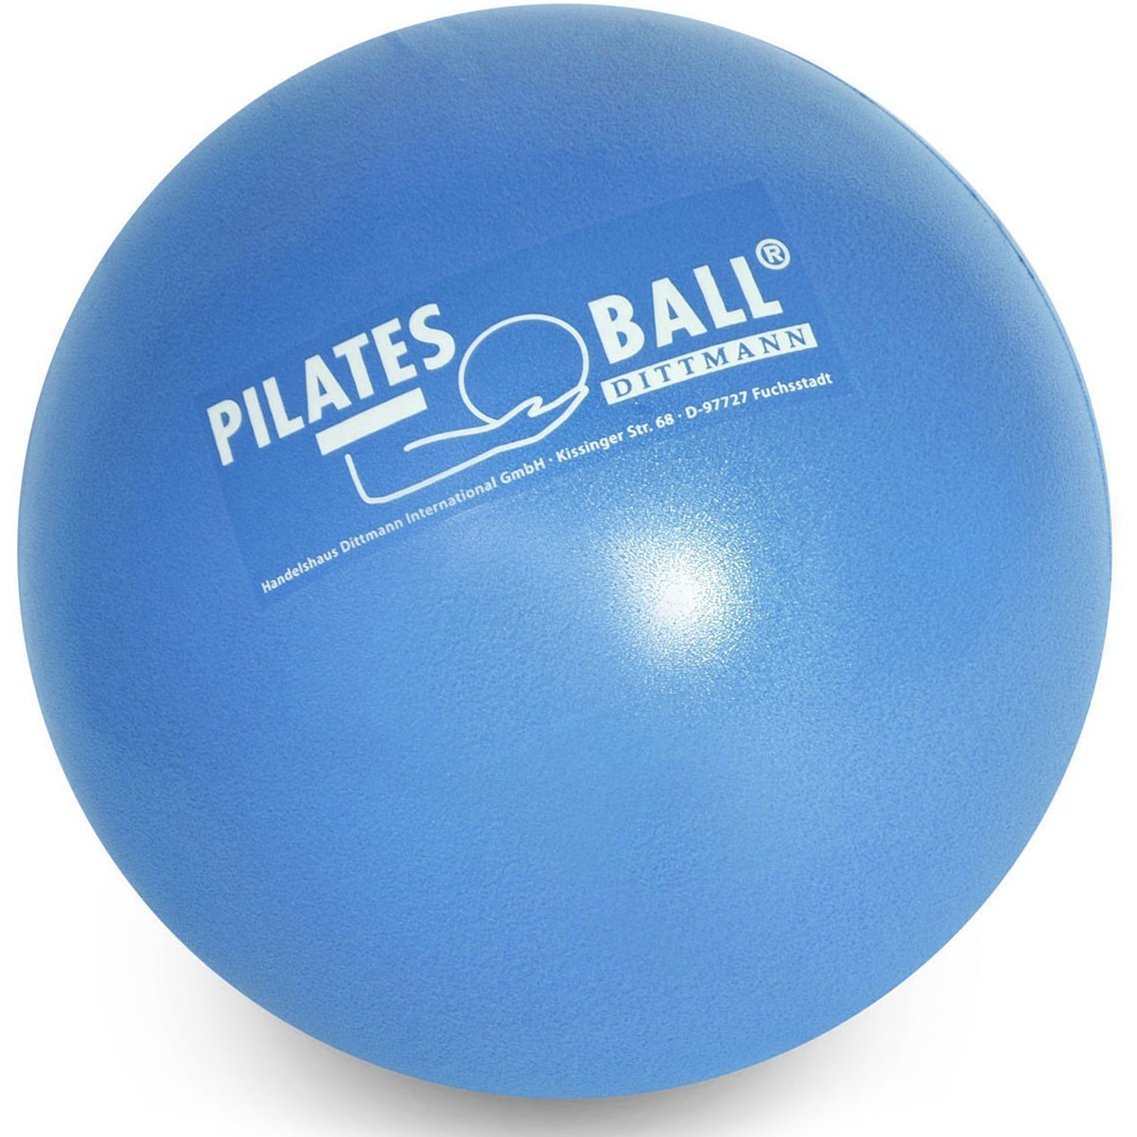 Pilates bal Dittmann 22 cm - Blauw